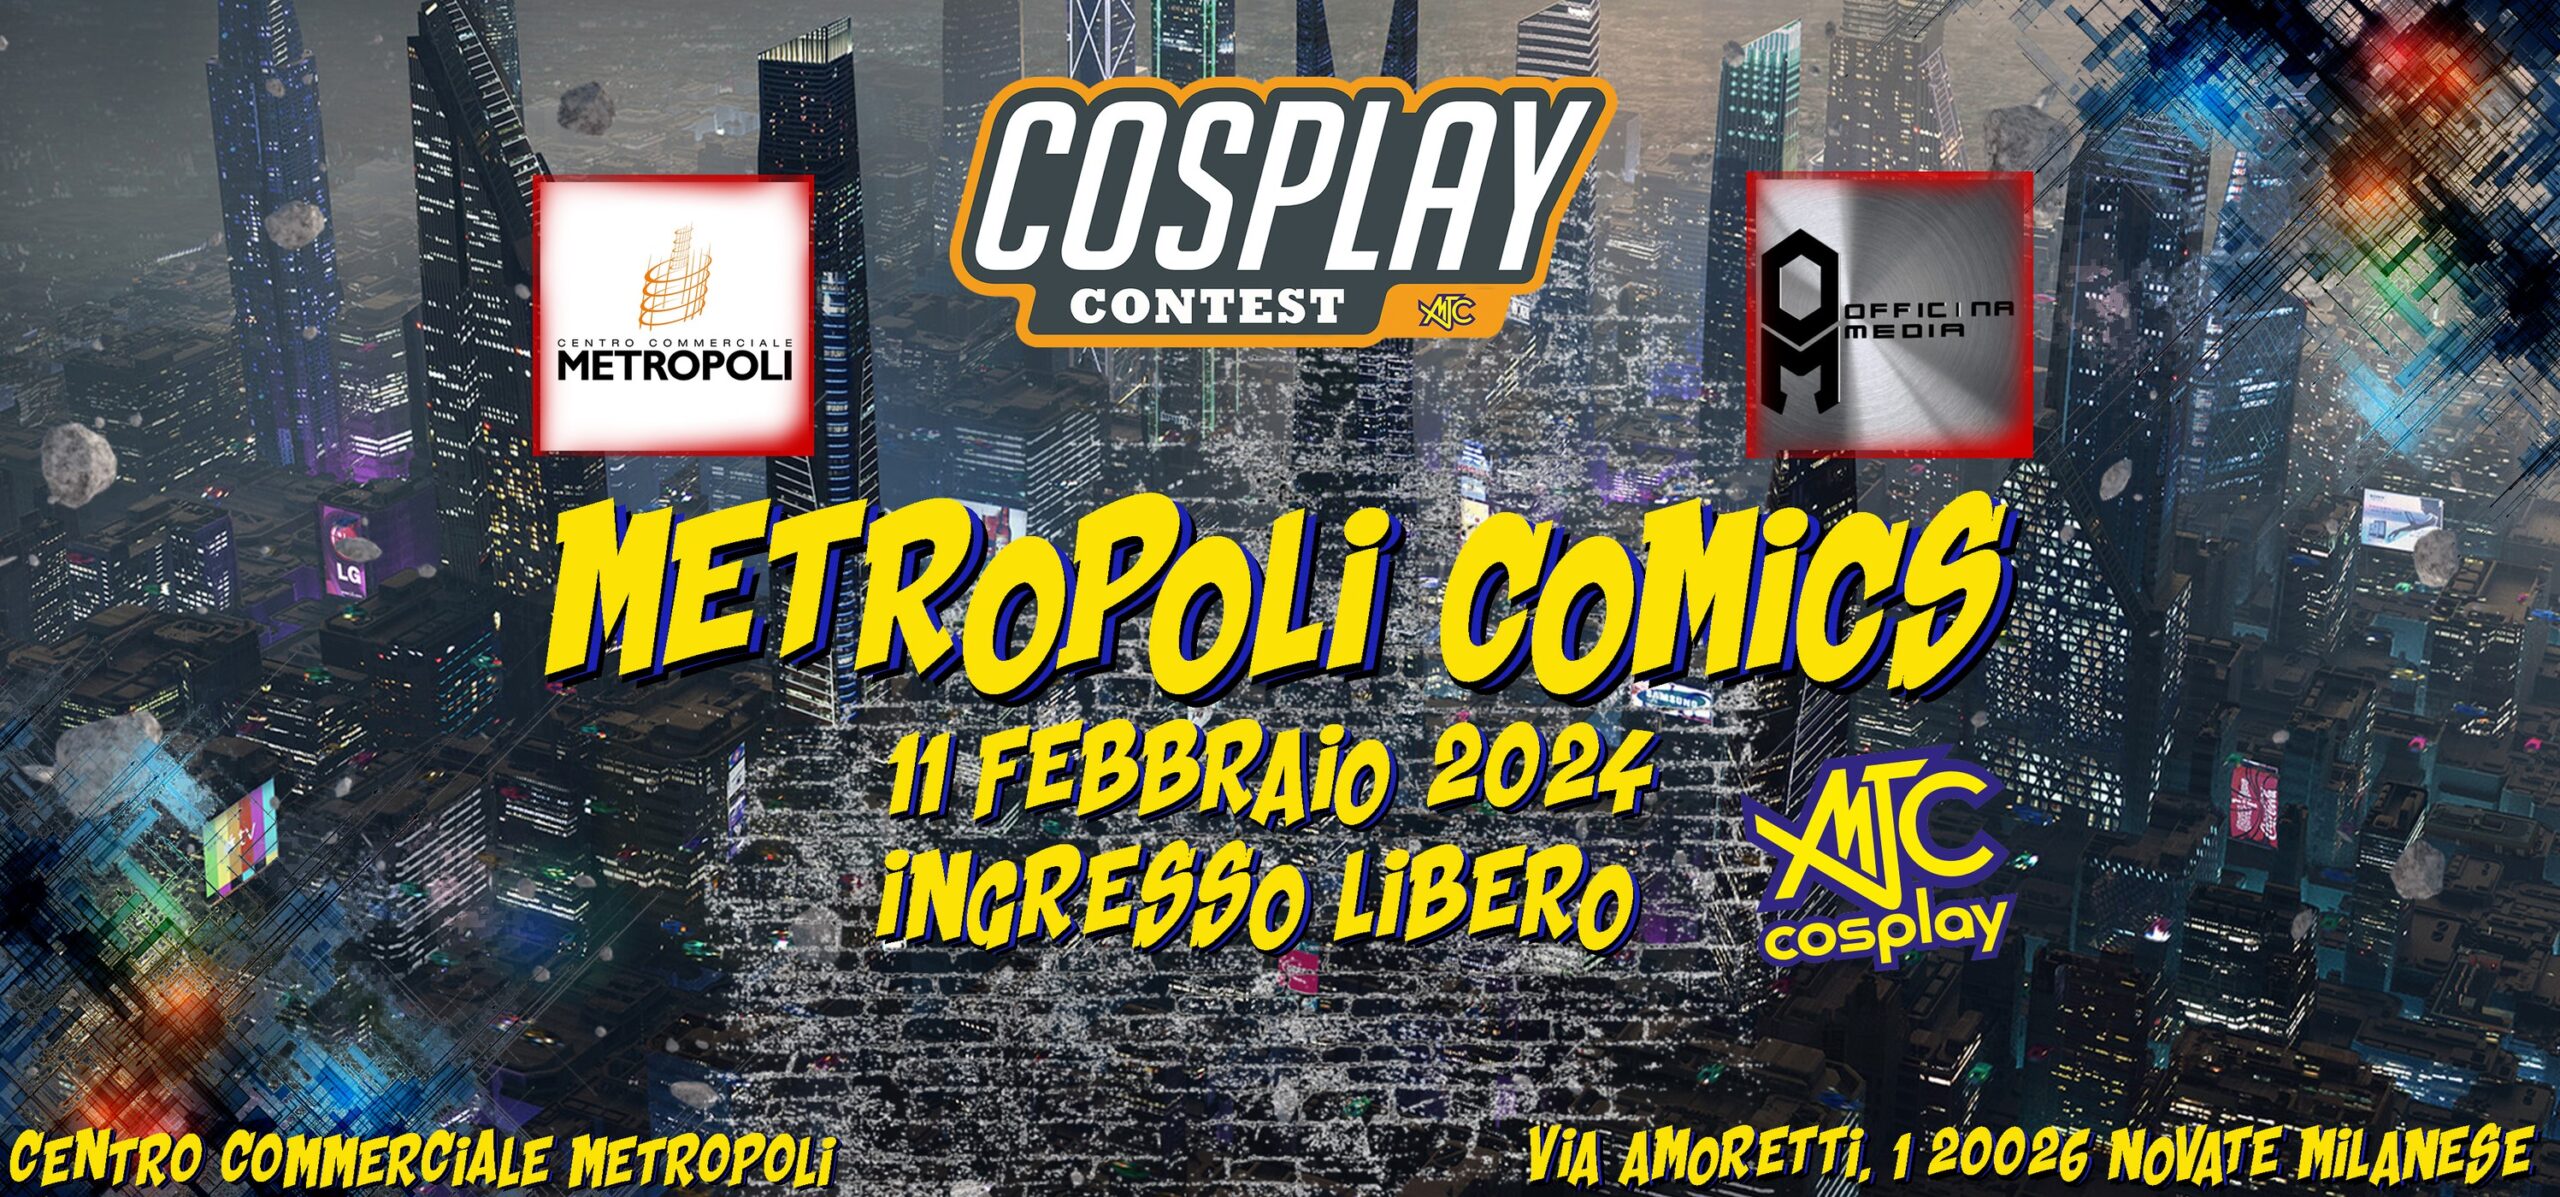 MjCosplayeventi presenta “Metropoli Comics”: 11 febbraio 2024